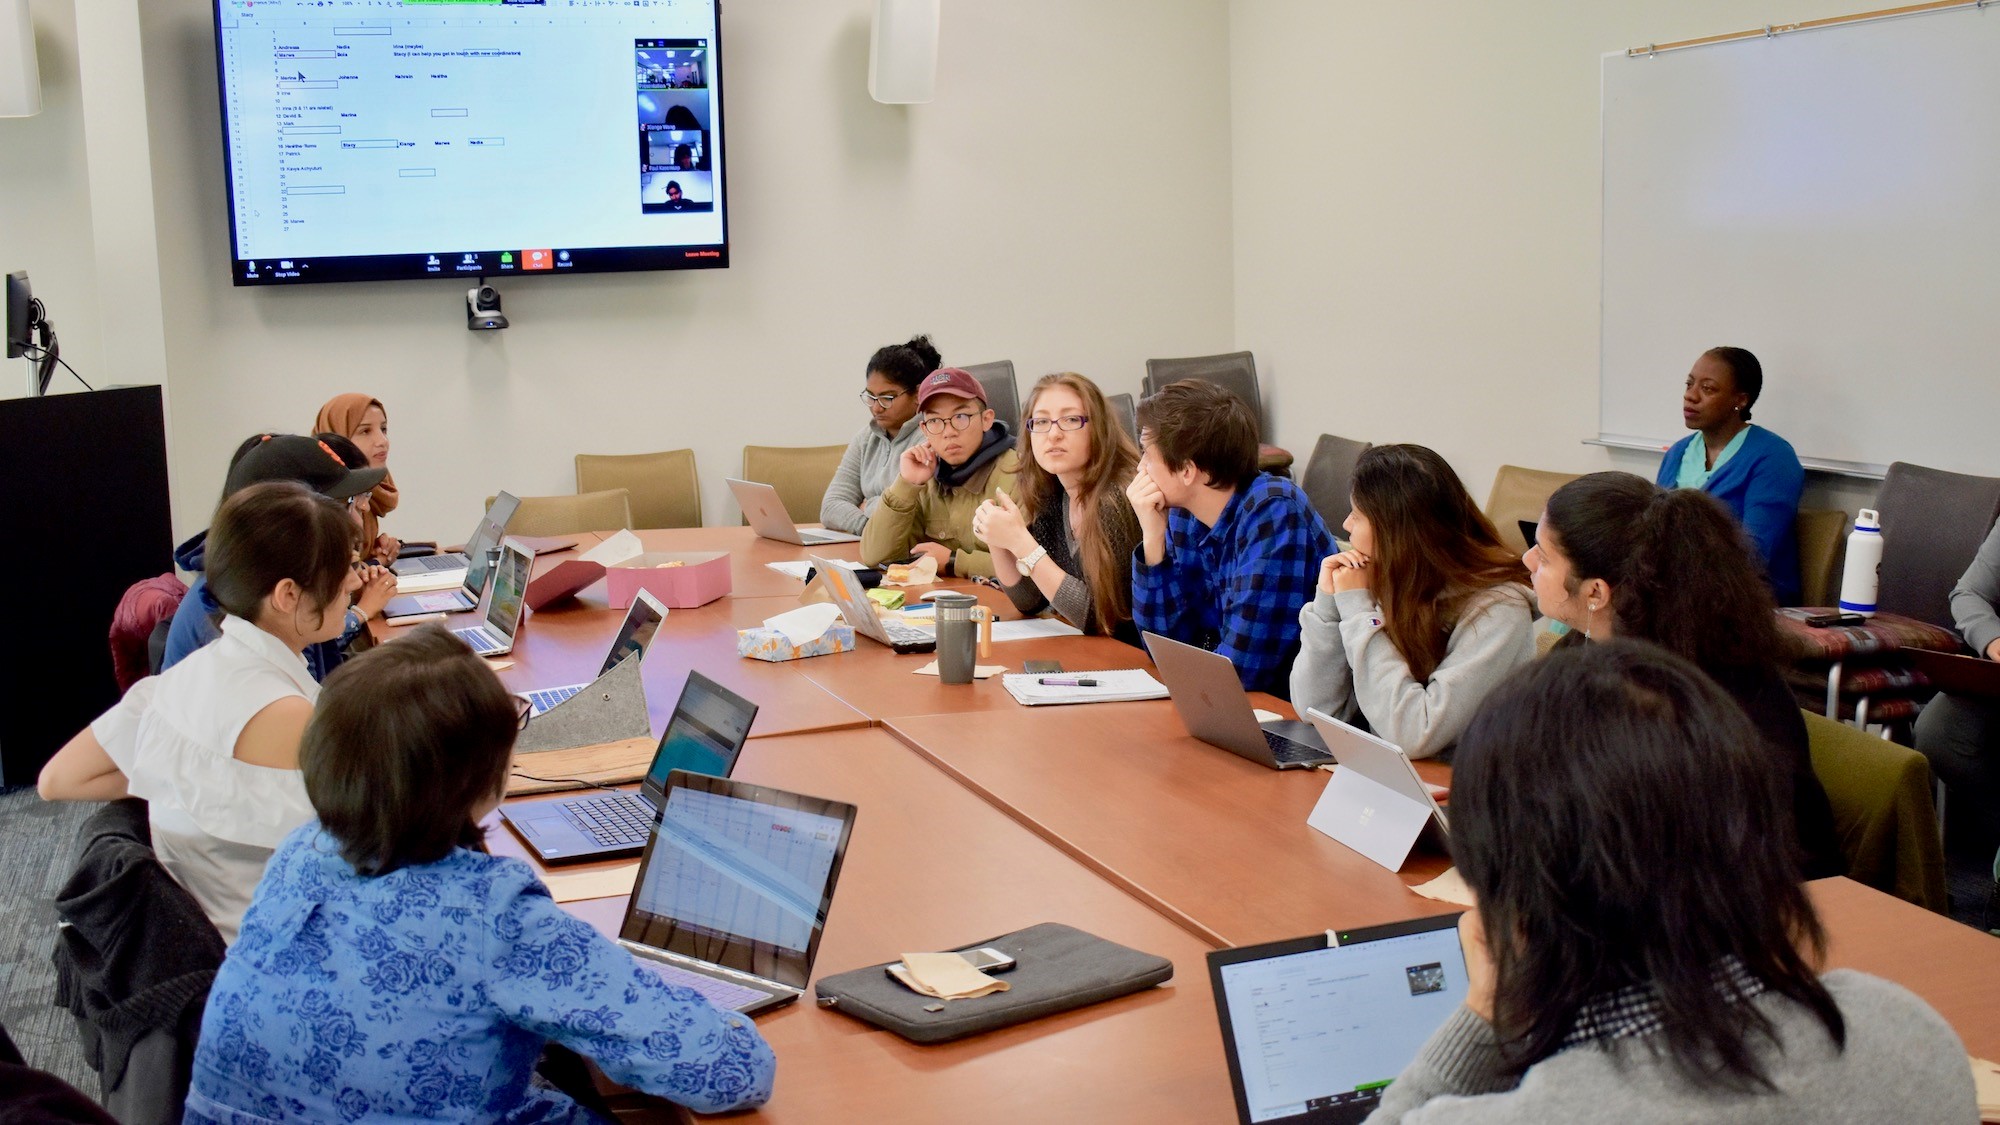 Fellows discussing project ideas during a meeting. Bonnie Shea/UC Davis